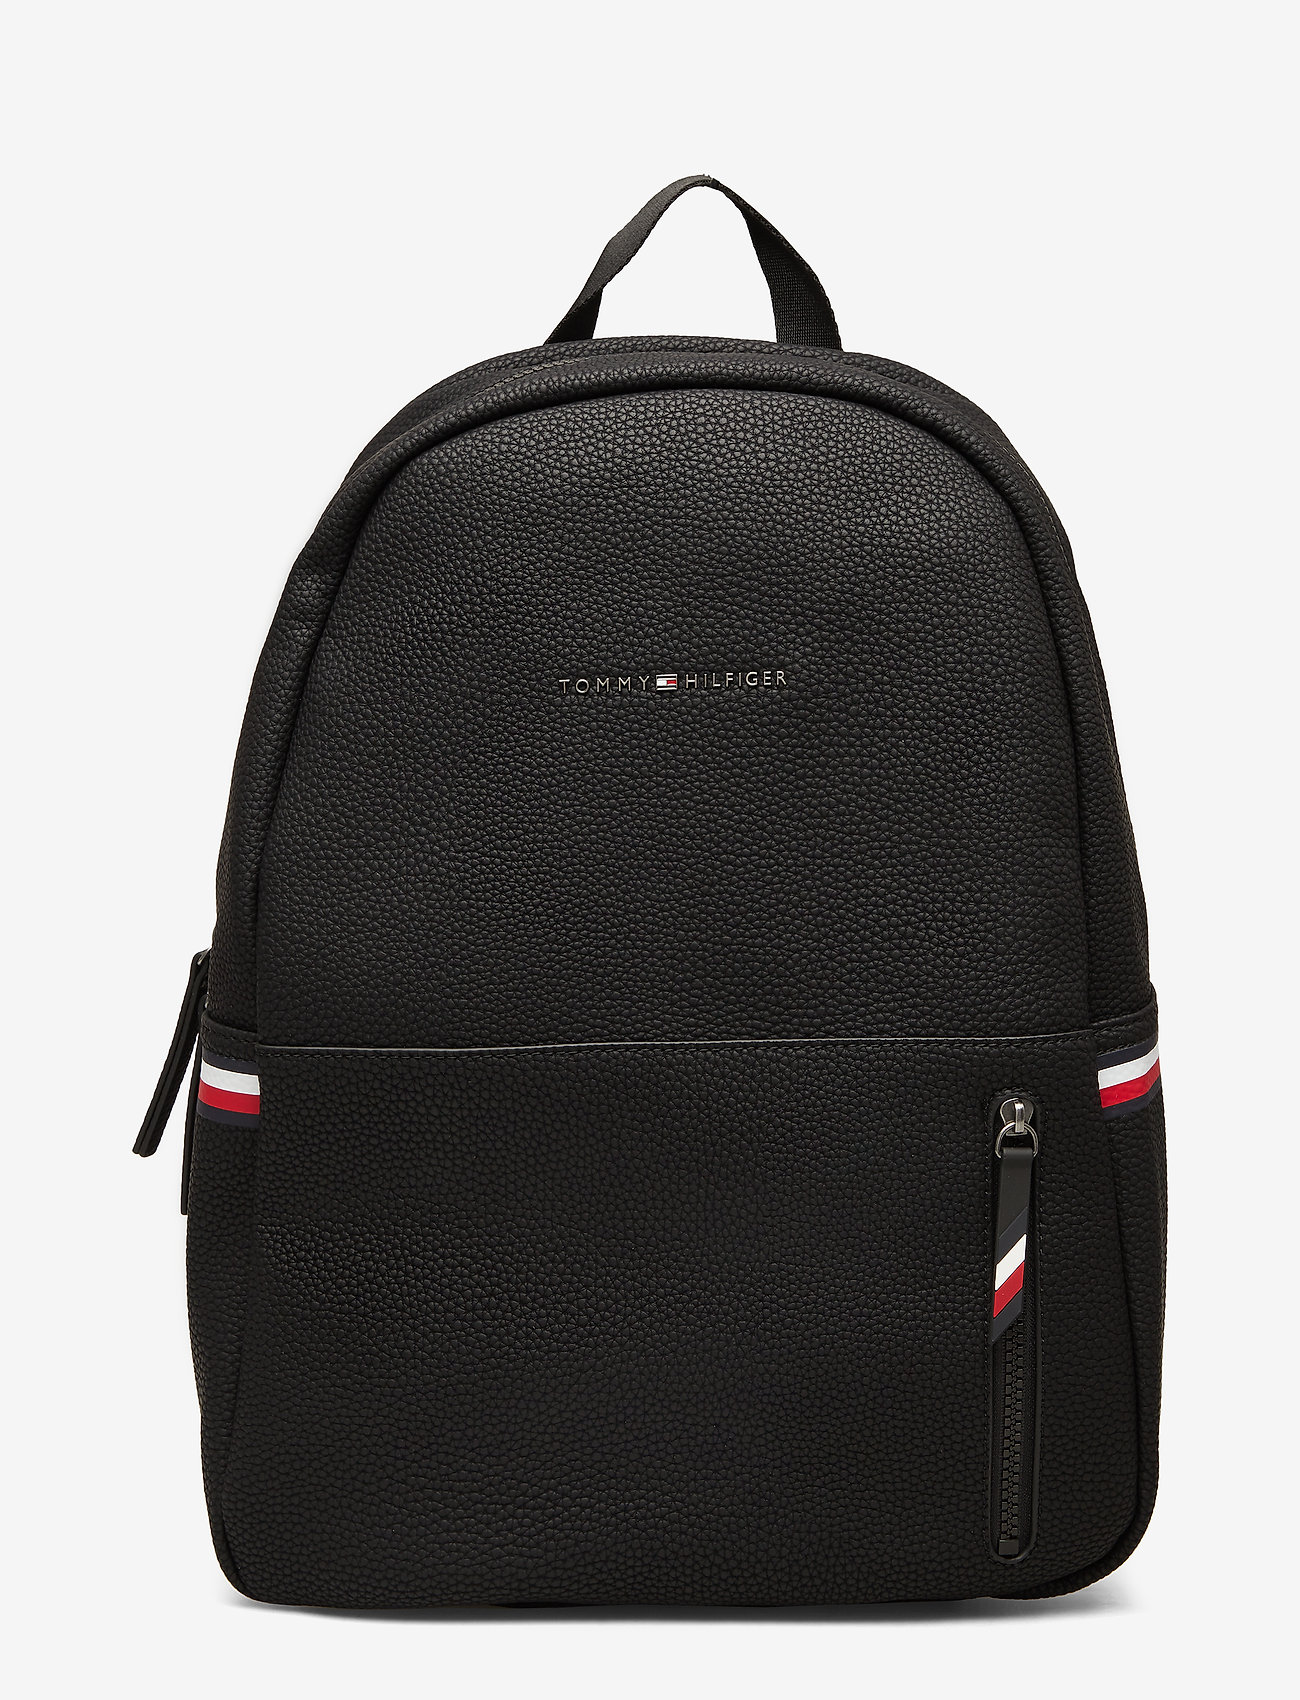 essential backpack tommy hilfiger